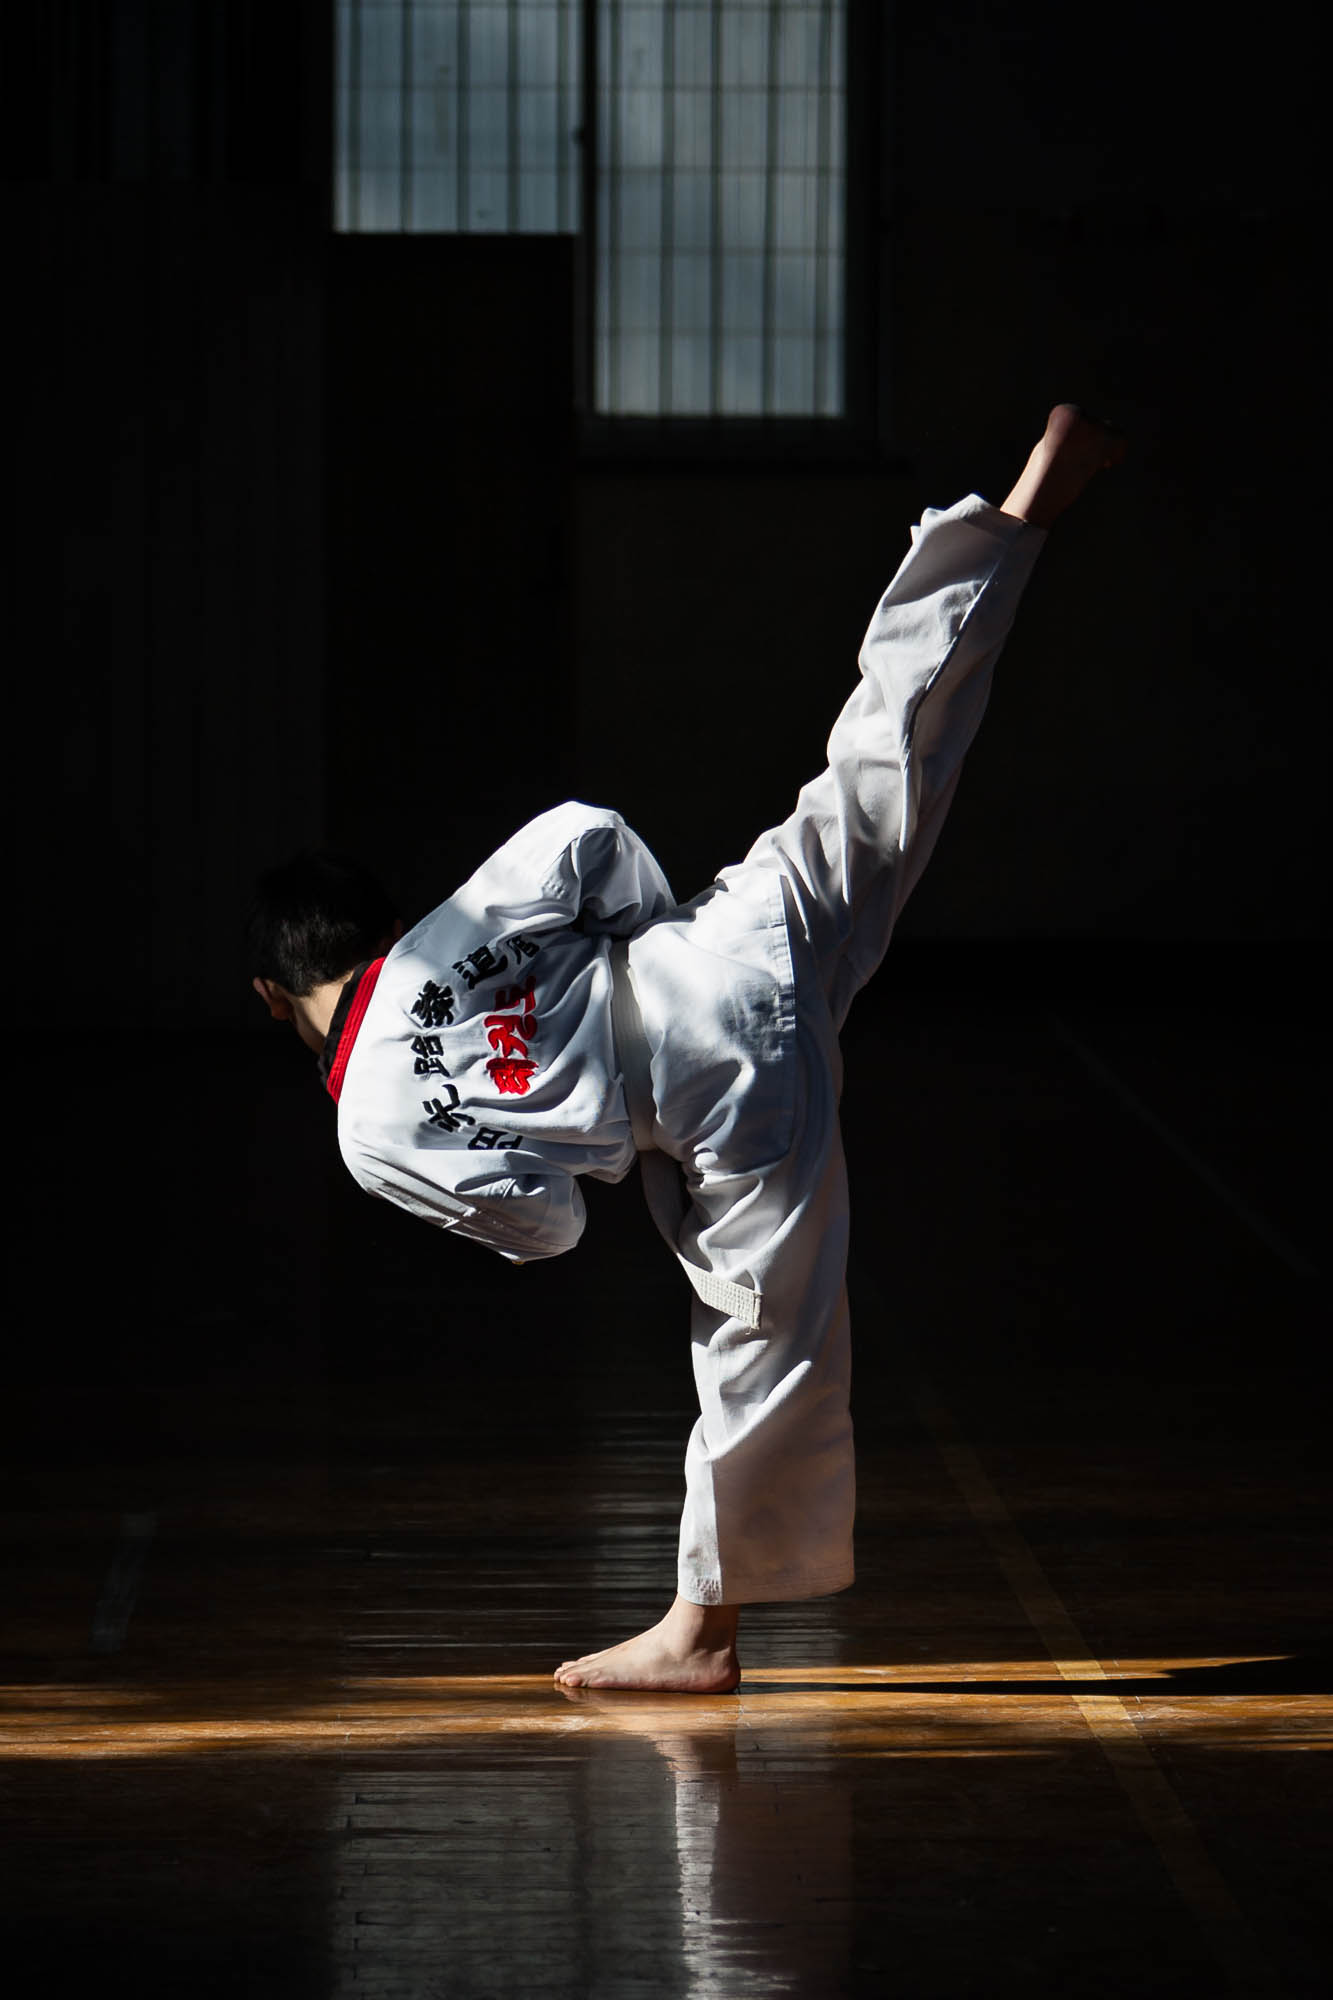 Pei Haonan practising taekwondo in Baoding